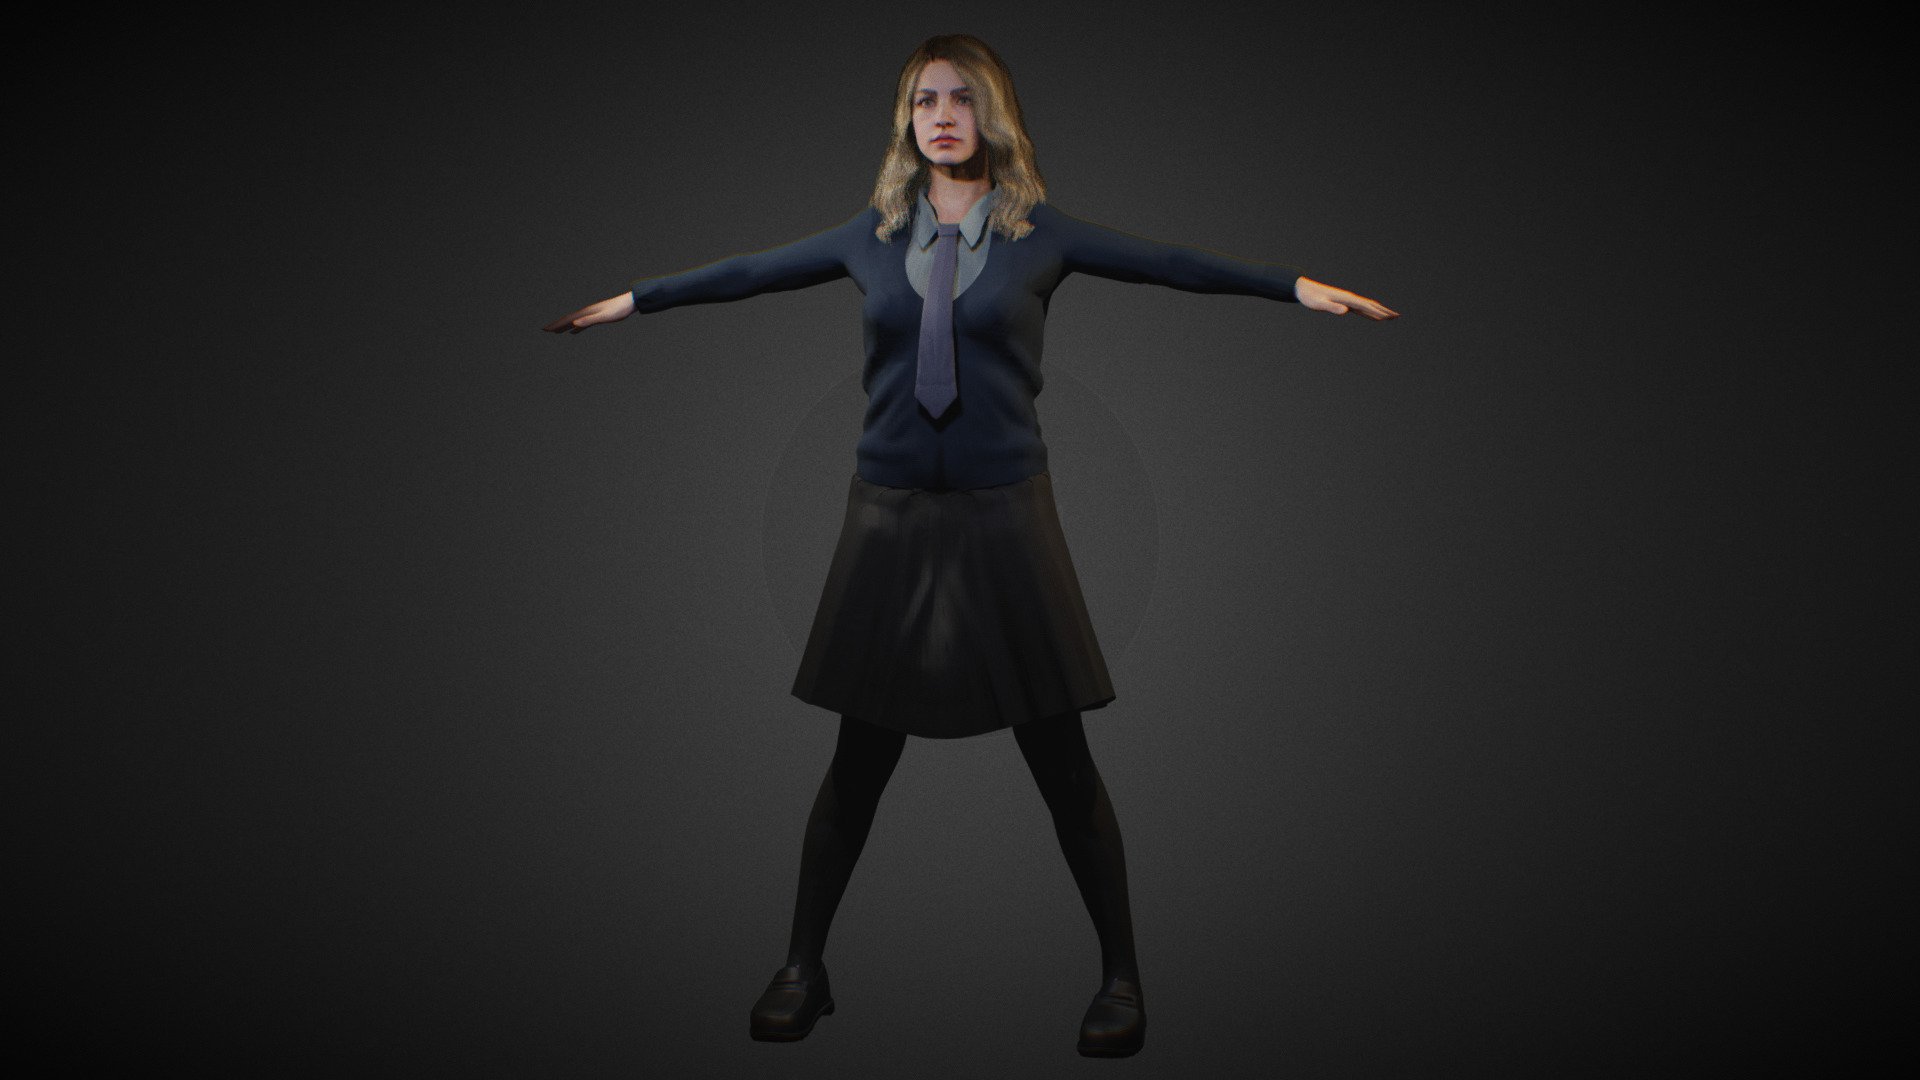 Female University Student Girl in Skirt  girl 3D model. Basic animation loop.  Model in Blender file. Body Fully rigged, face basic rig. SSS subsurface scattering. mixamo bone names for animation. Blend file format. (you can export to any format from blender) 3d model